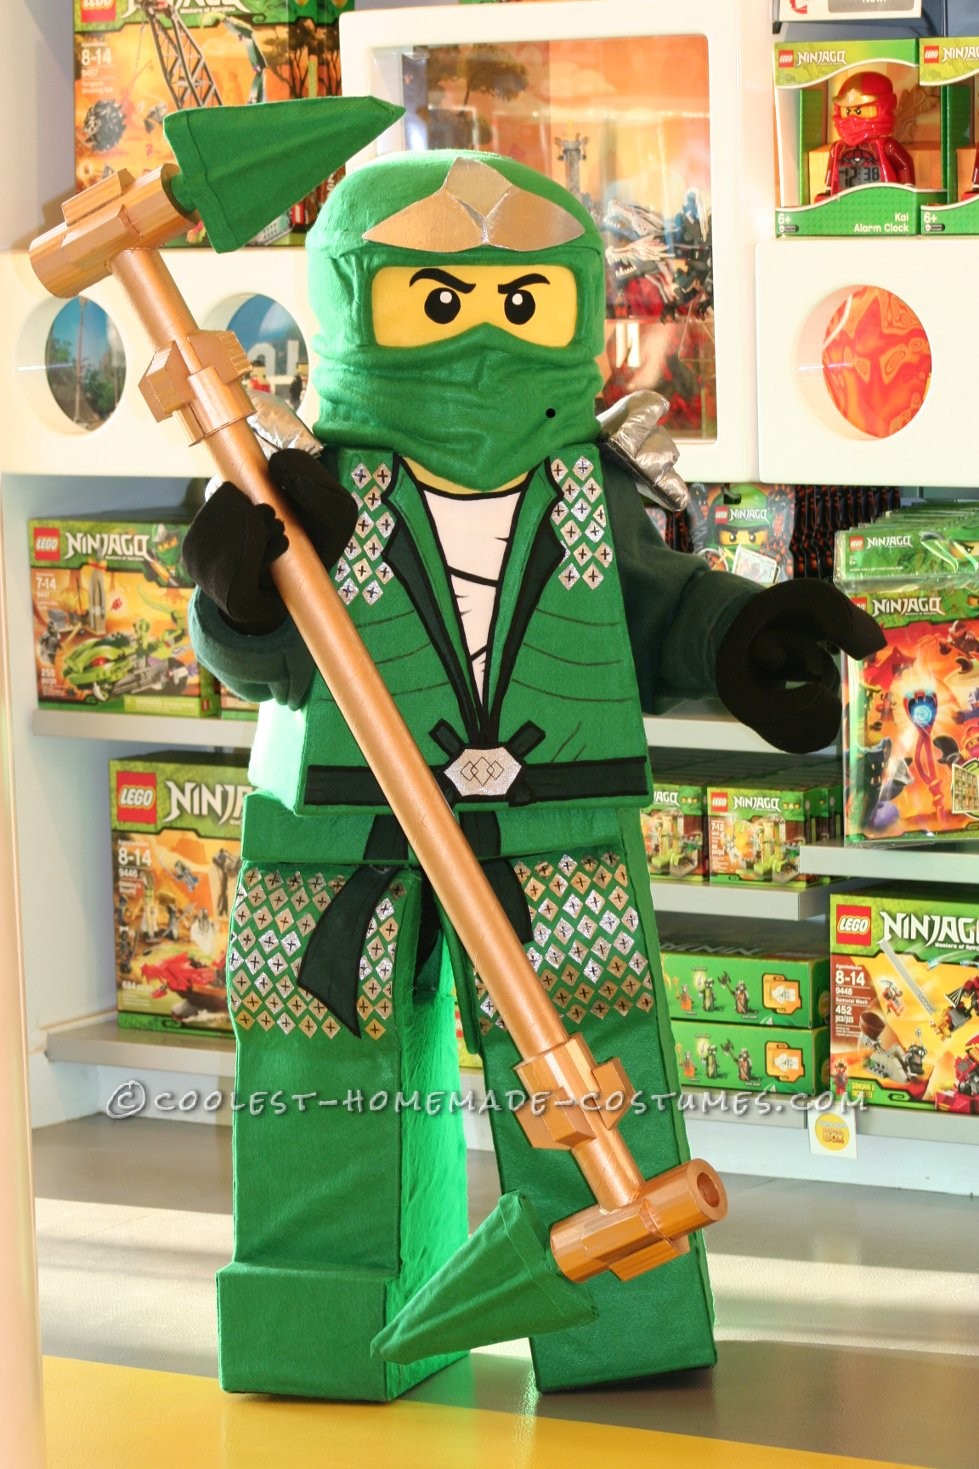 Coolest Lego Ninjago Homemade Halloween Costume